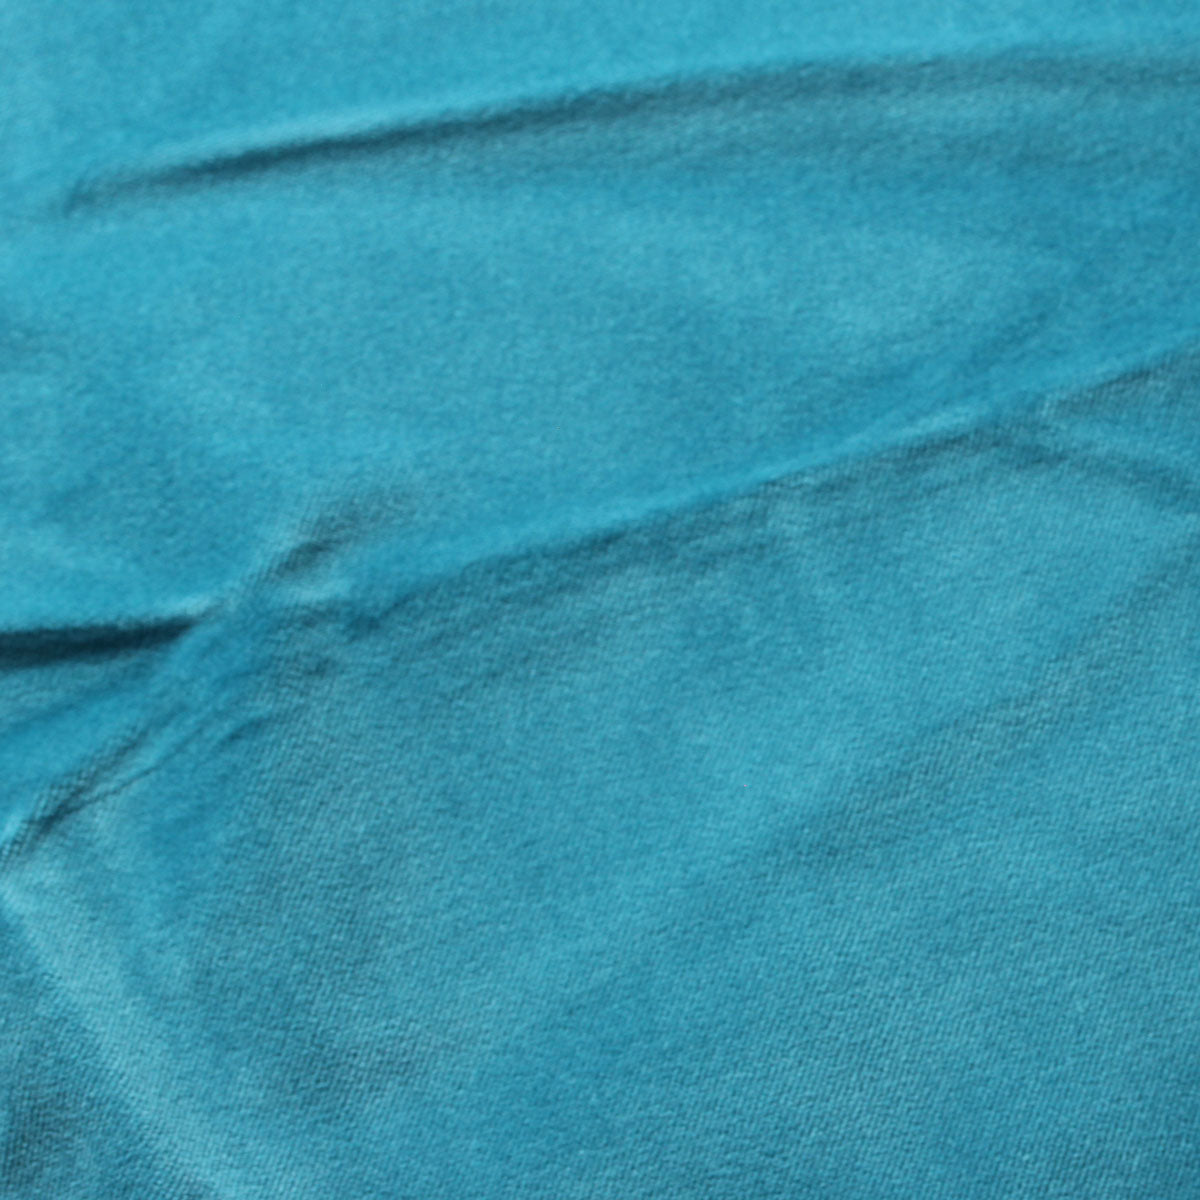 Turquoise Blue Cotton Velvet Upholstery Drapery Fabric - Fashion Fabrics Los Angeles 